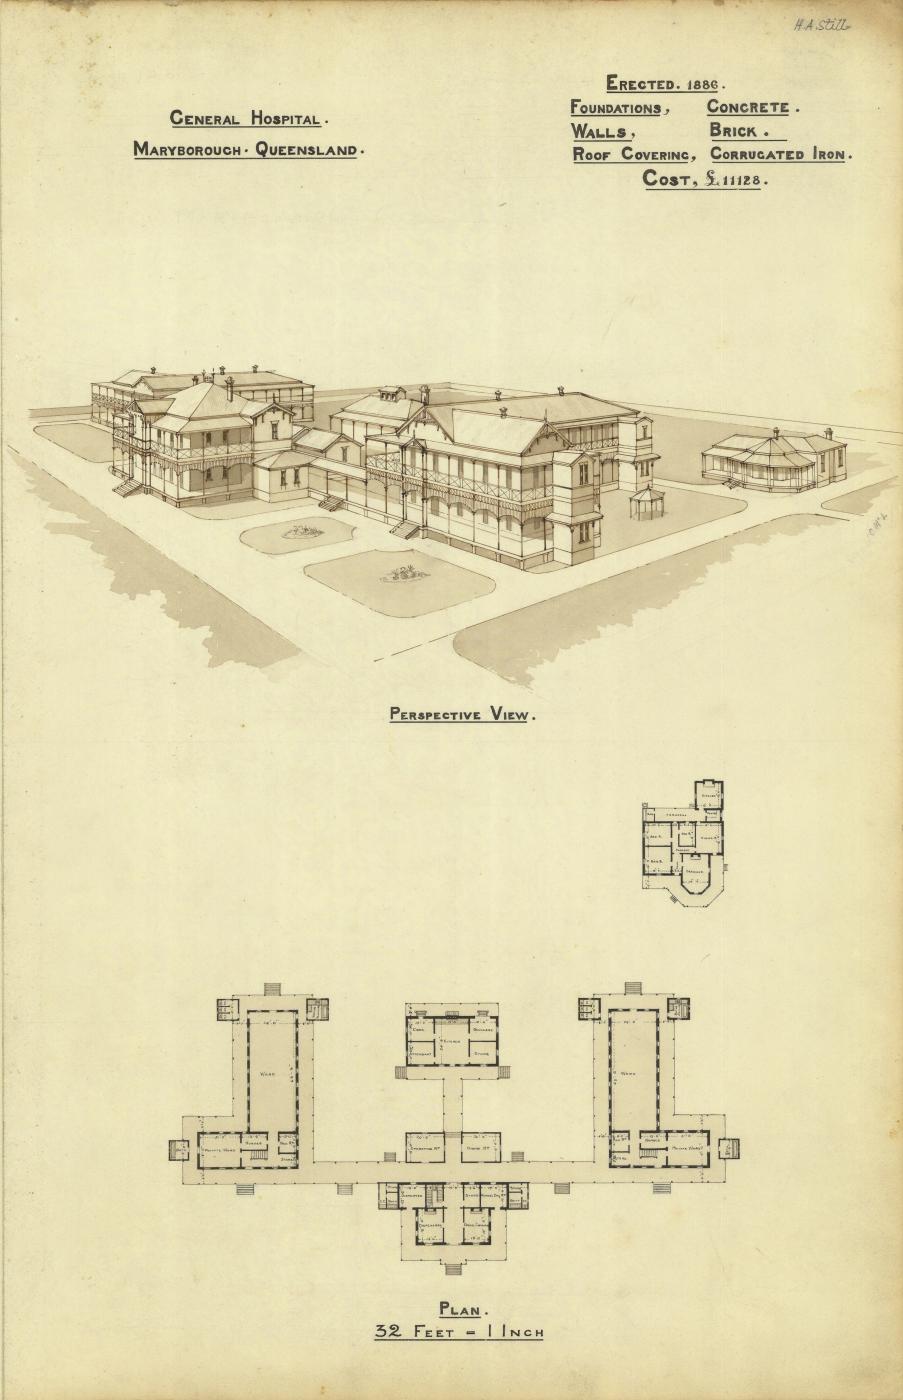 Architectural plan of Maryborough Base Hospital